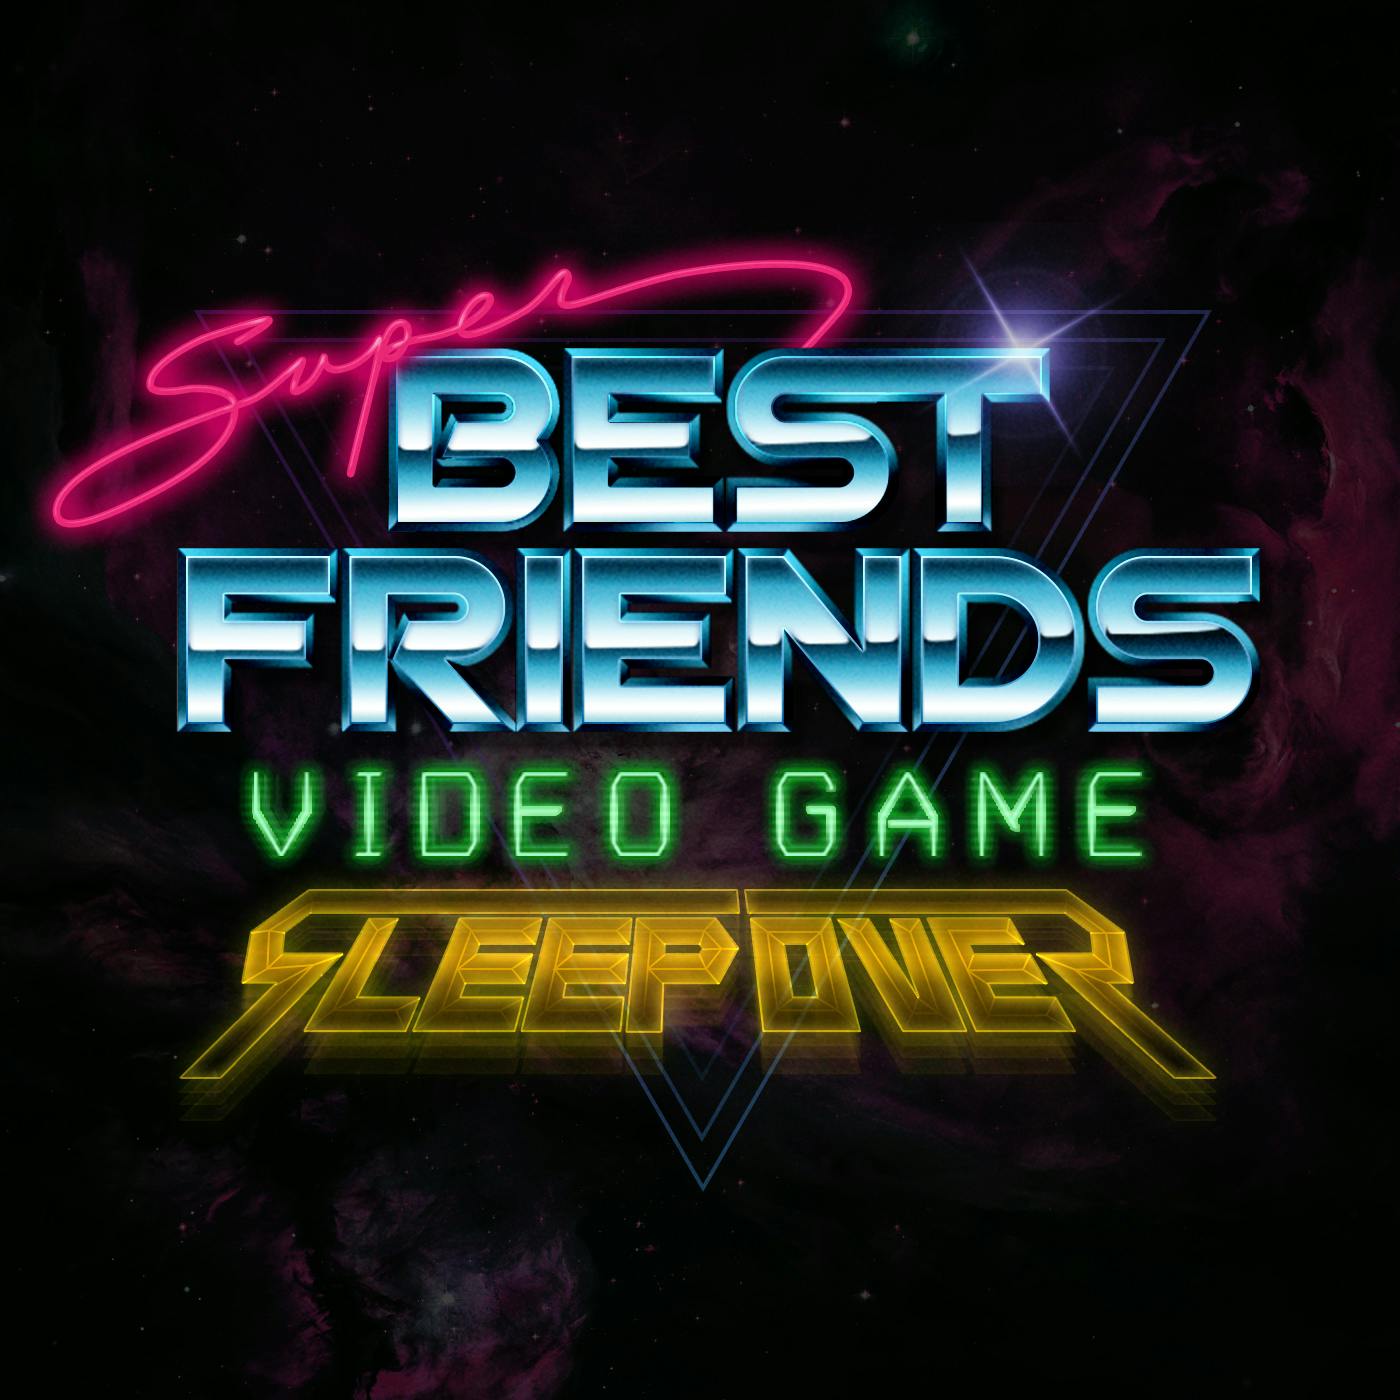 Super Best Friends Video Game Sleepover - Episode 53